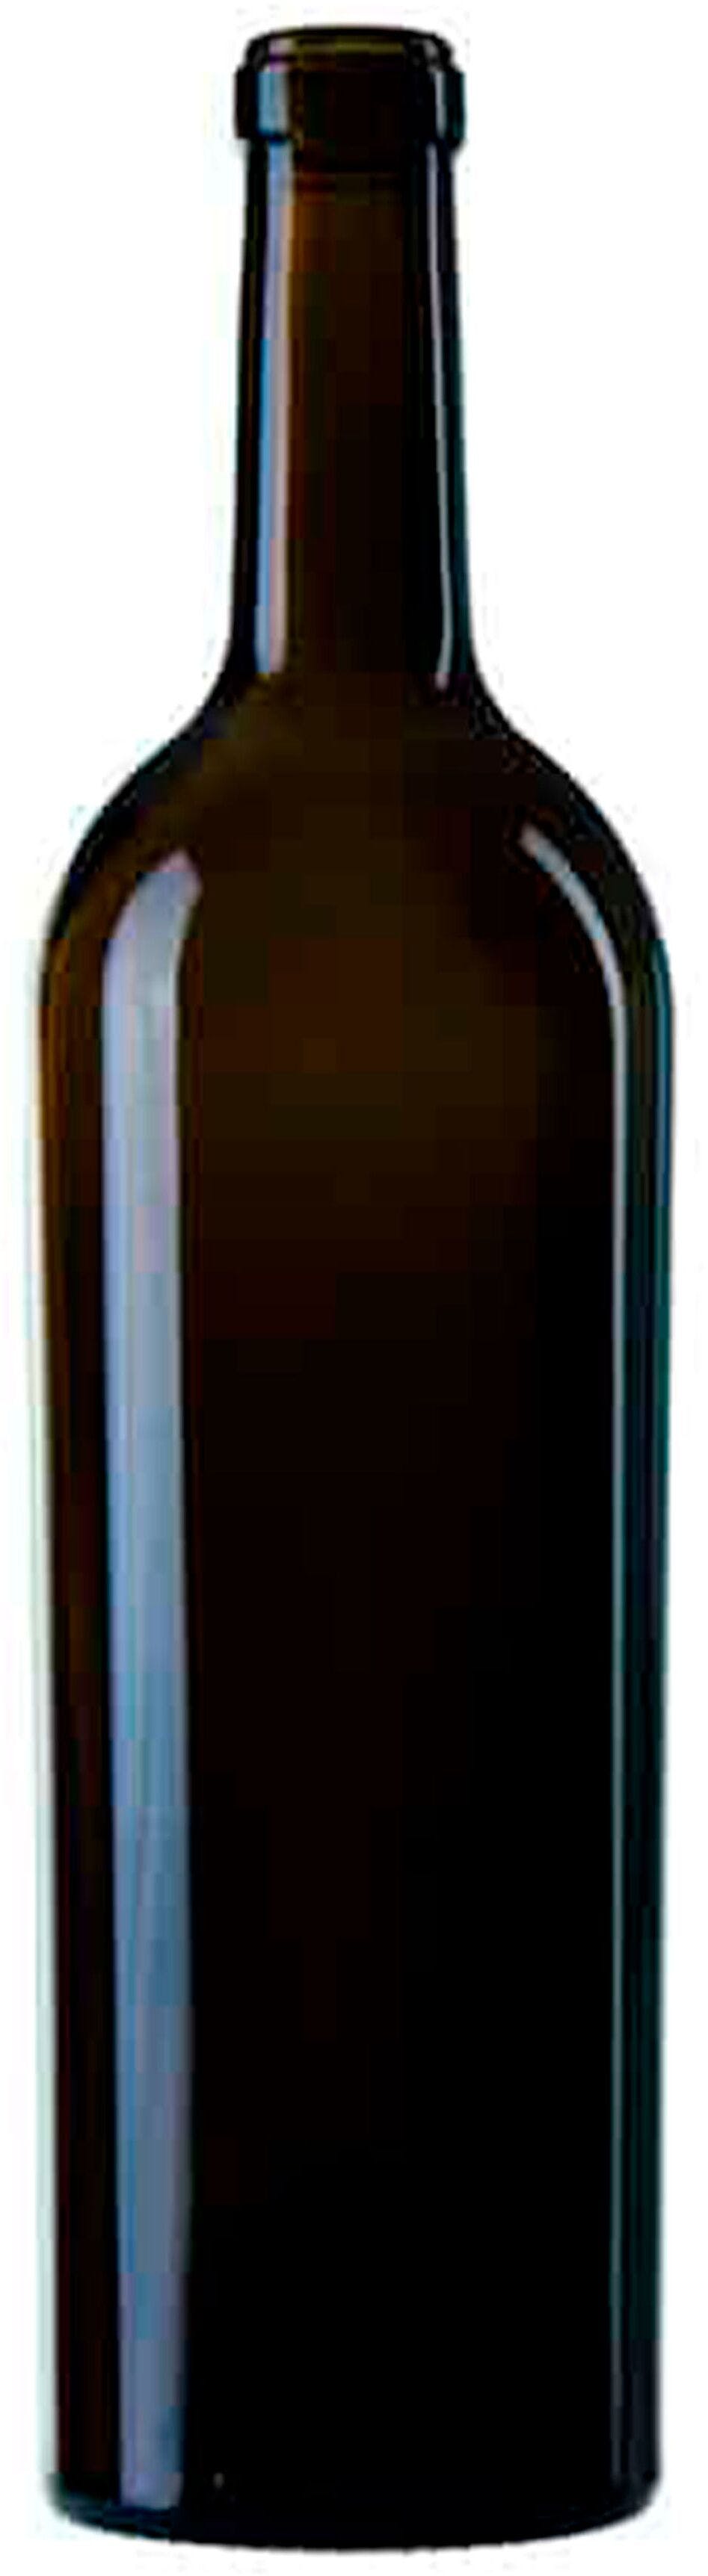 Flasche Bordeaux   ANNI 50 750 ml BG-Korken